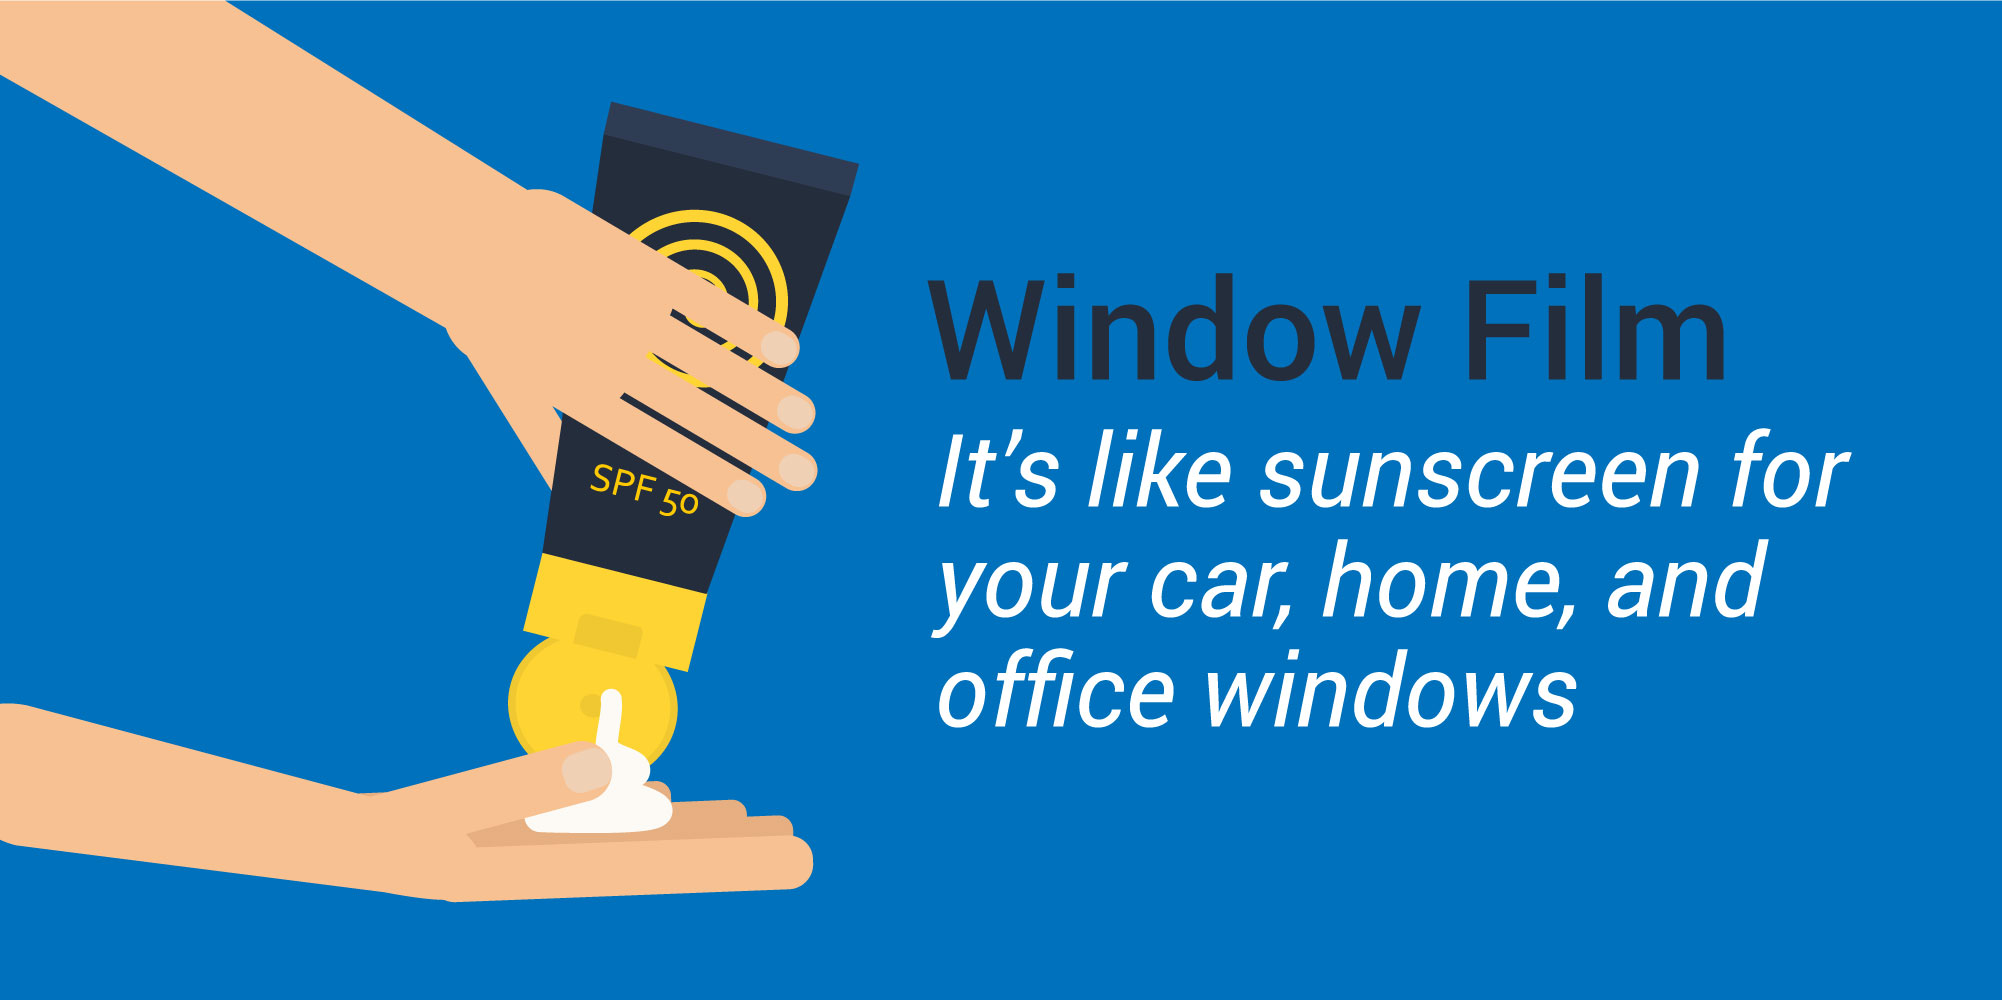 UV-Window-Film-for-Homes-Like-Sunscreen